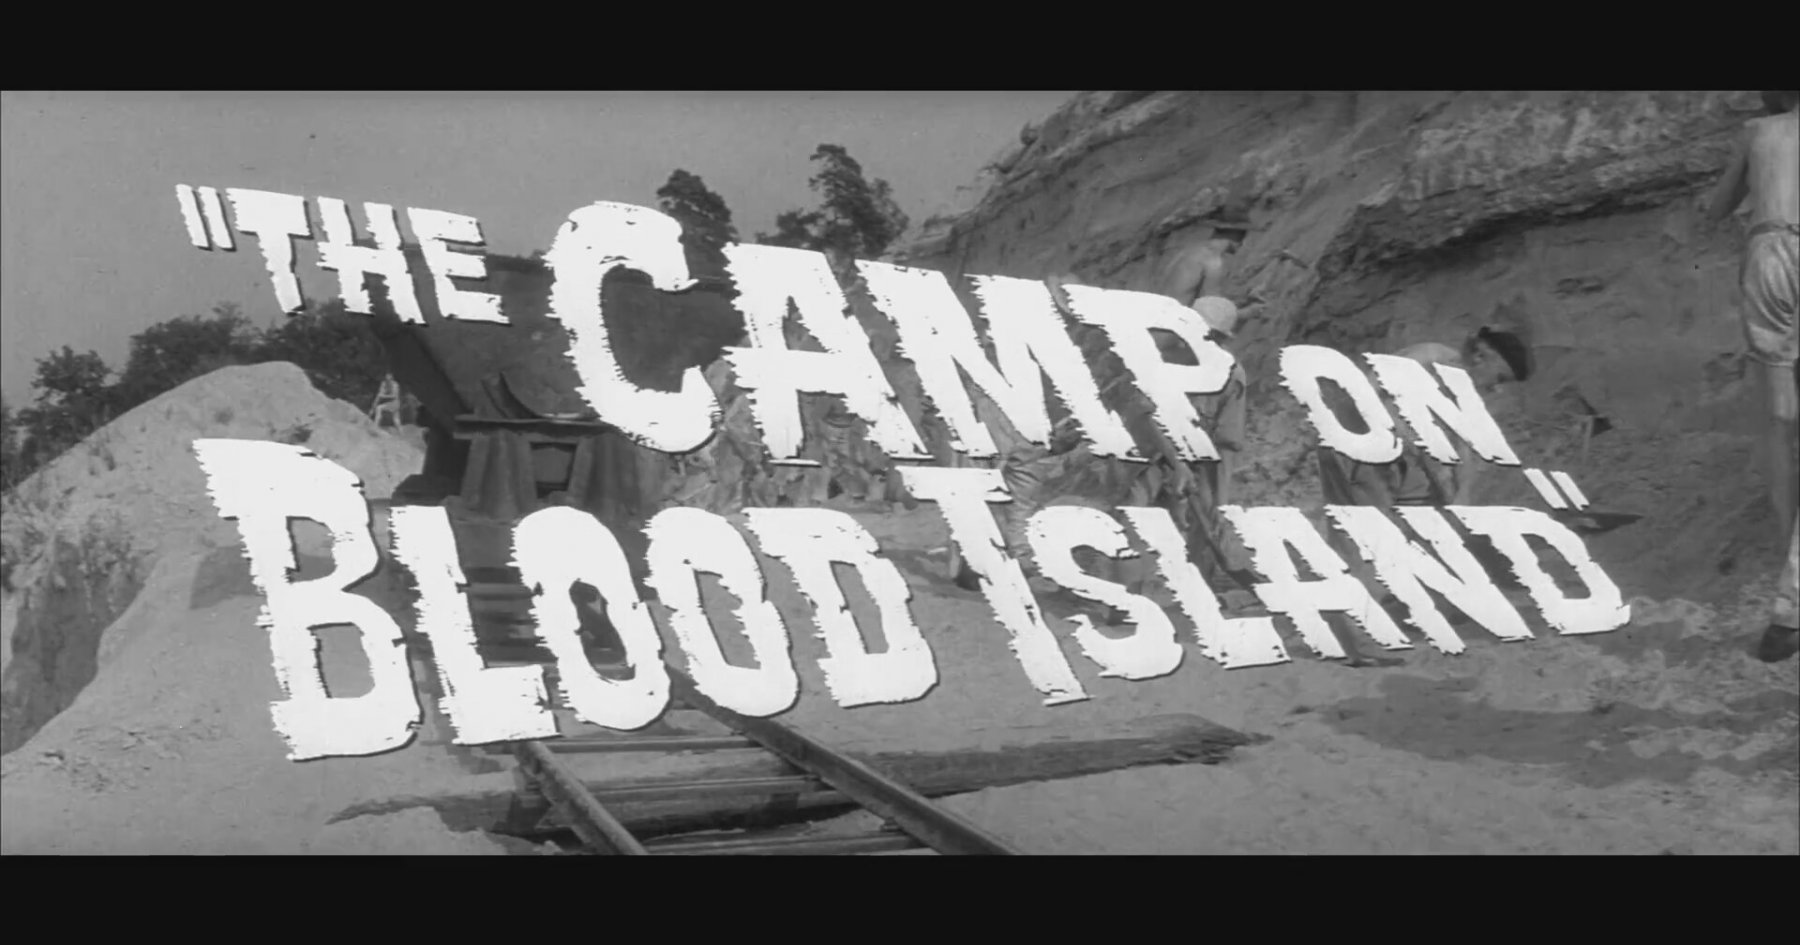 ebert camp blood island